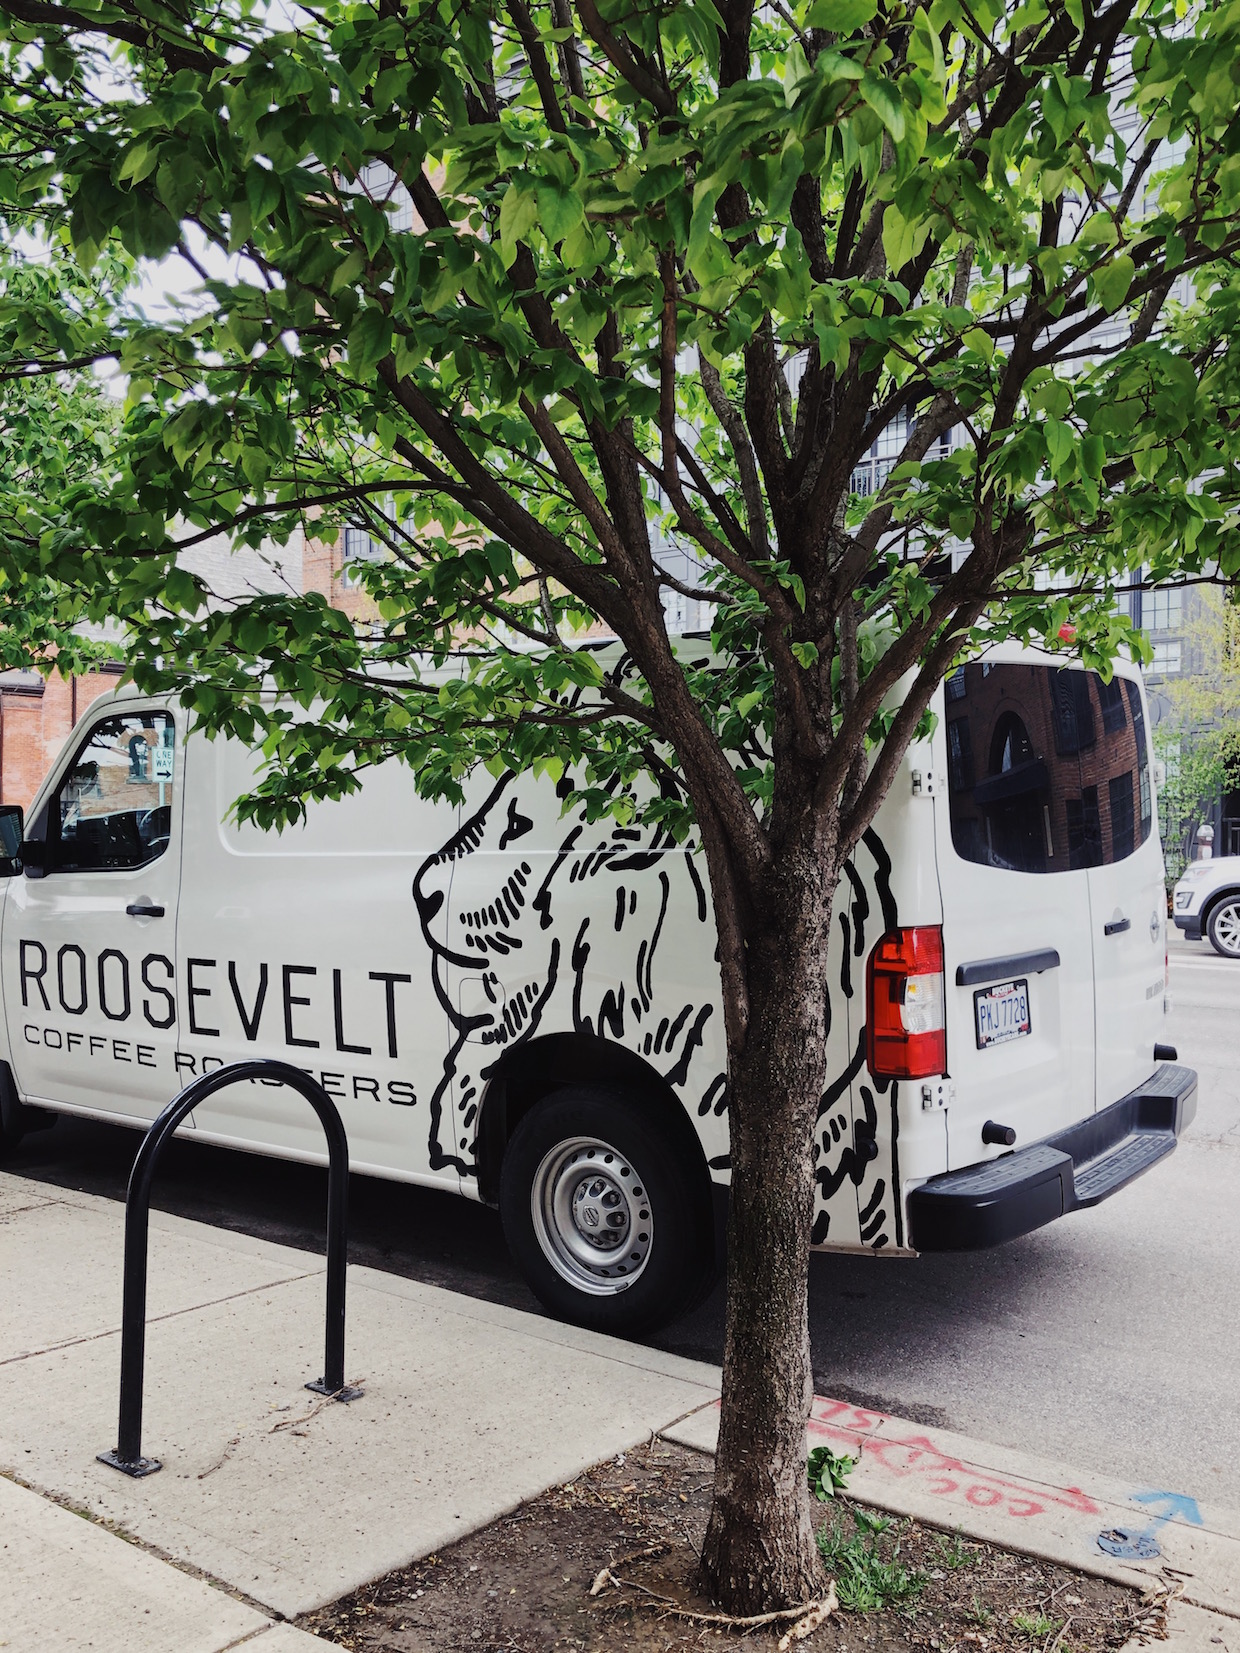 Roosevelt coffee truck